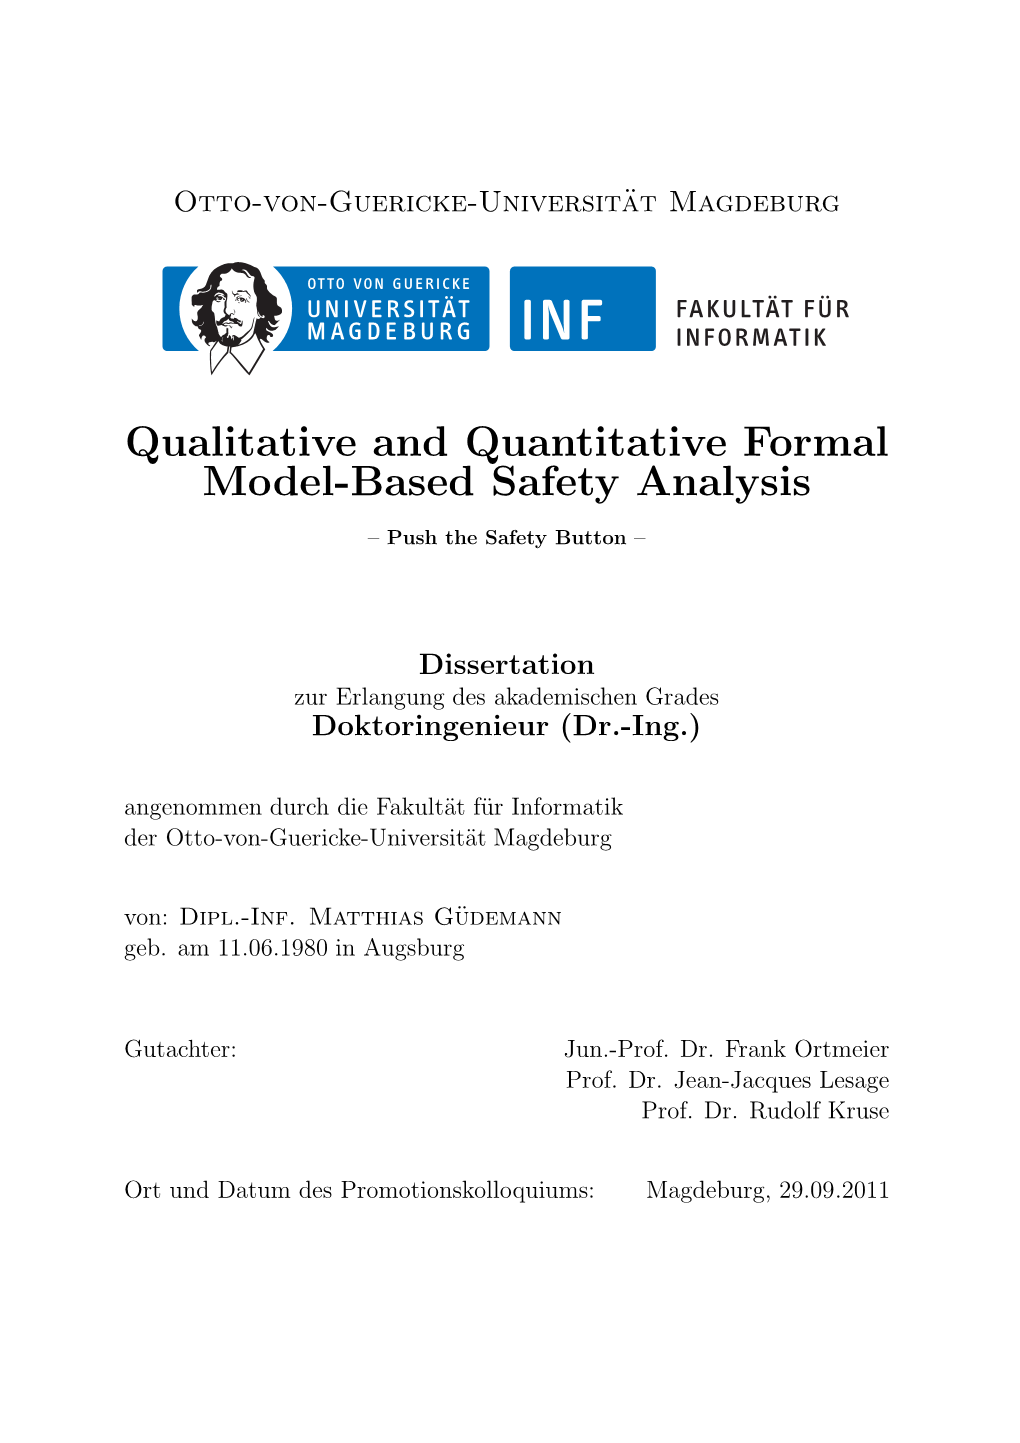 Qualitative and Quantitative Formal Model-Based Safety Analysis